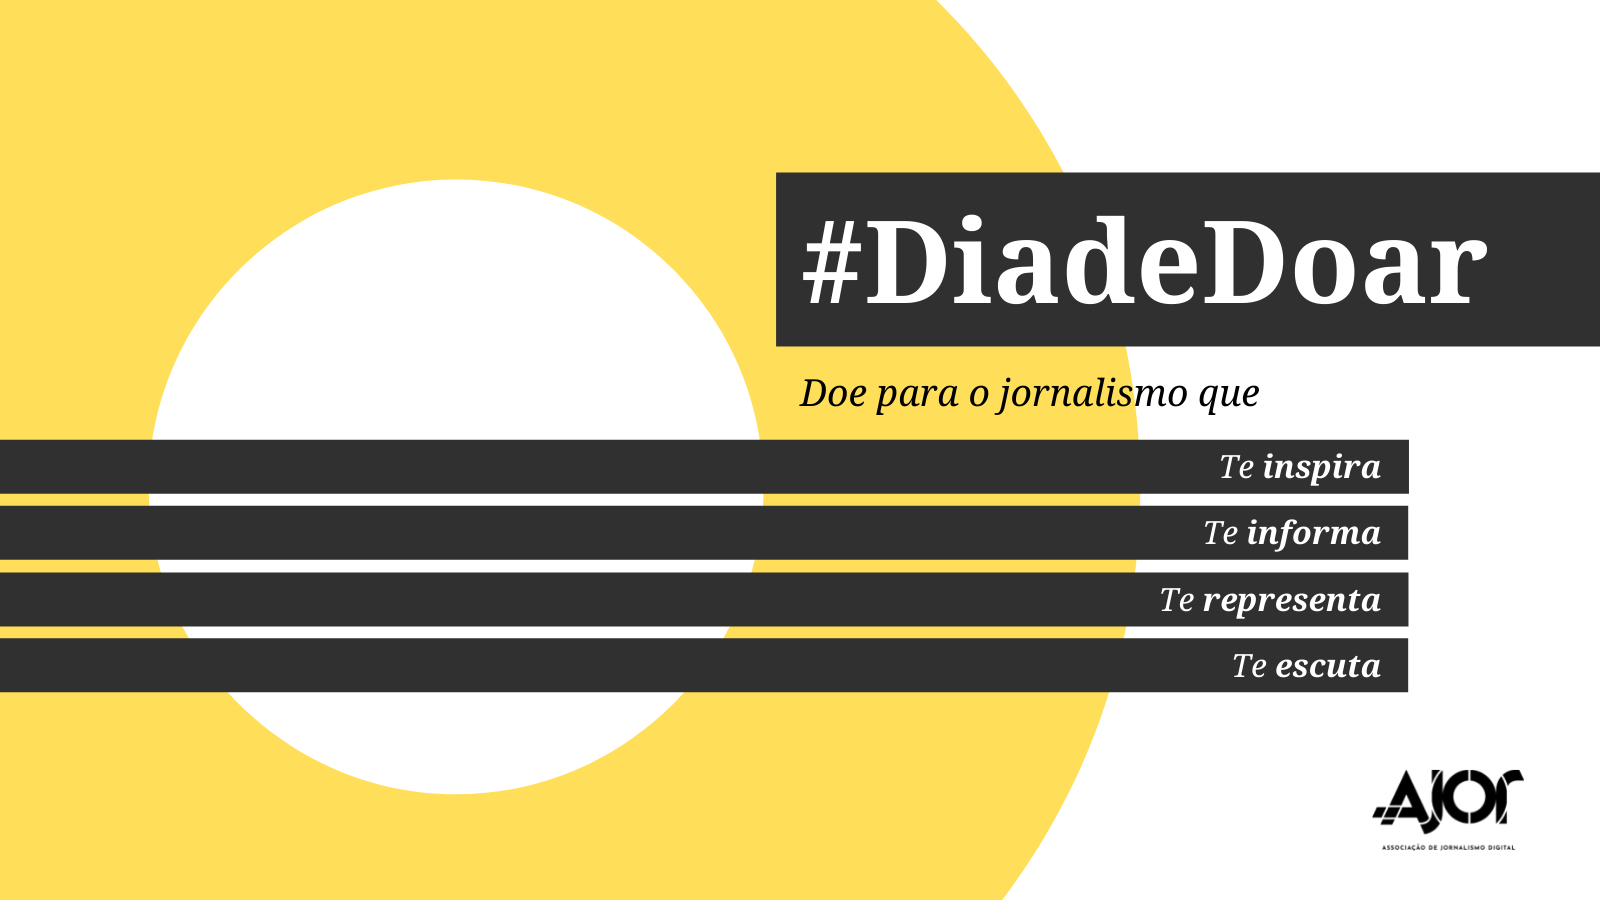 Jornalismo digital brasileiro se une na campanha #DiadeDoar